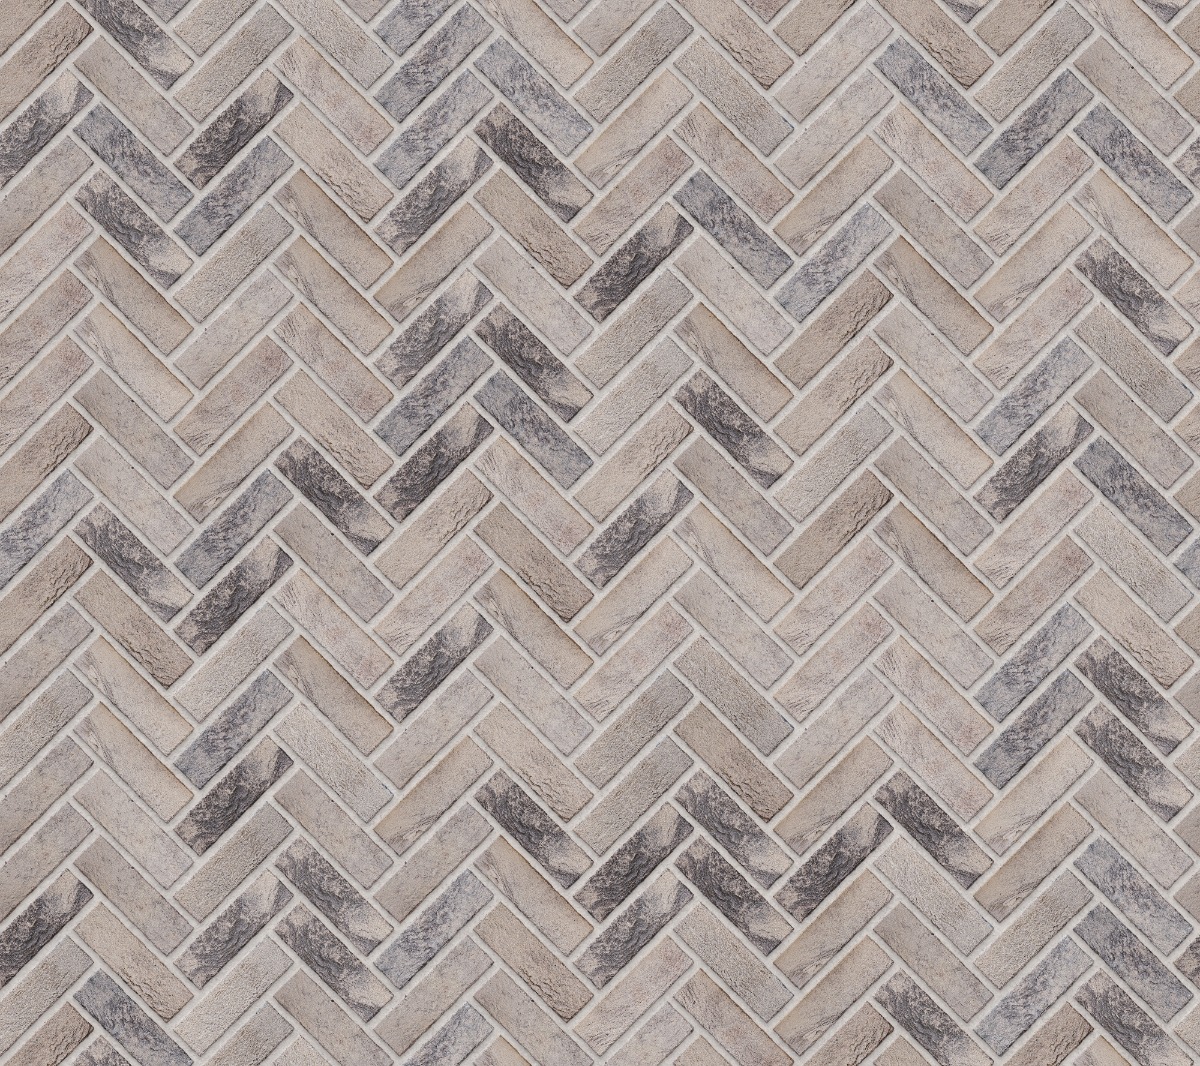 A seamless brick texture with beige brick units arranged in a Herringbone pattern